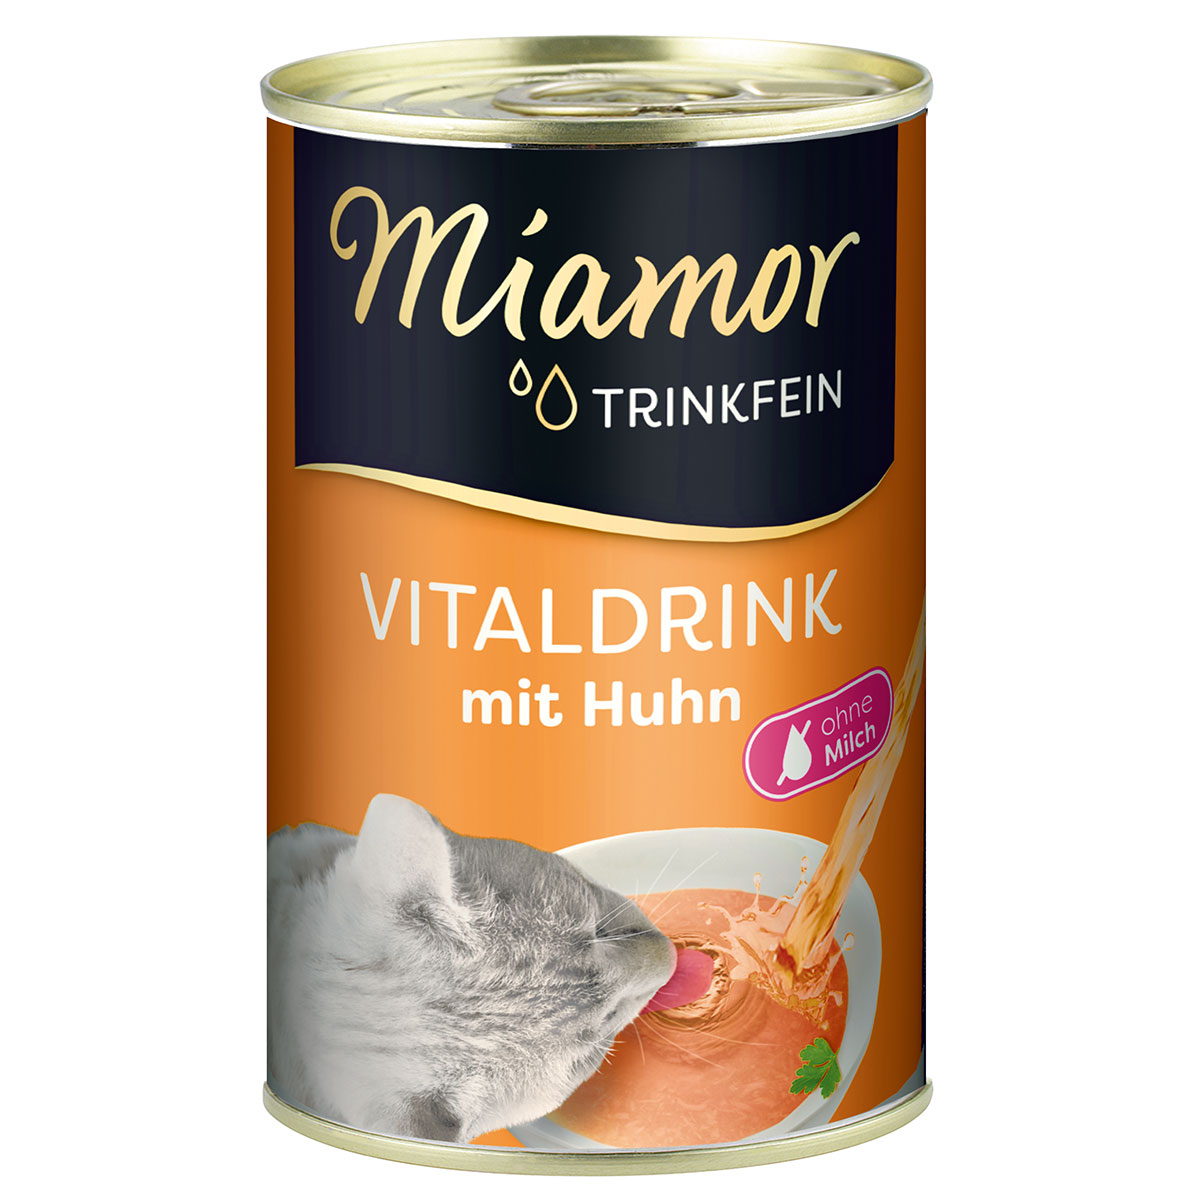 miamor trinkfein vitaldrink mit huhn 135ml